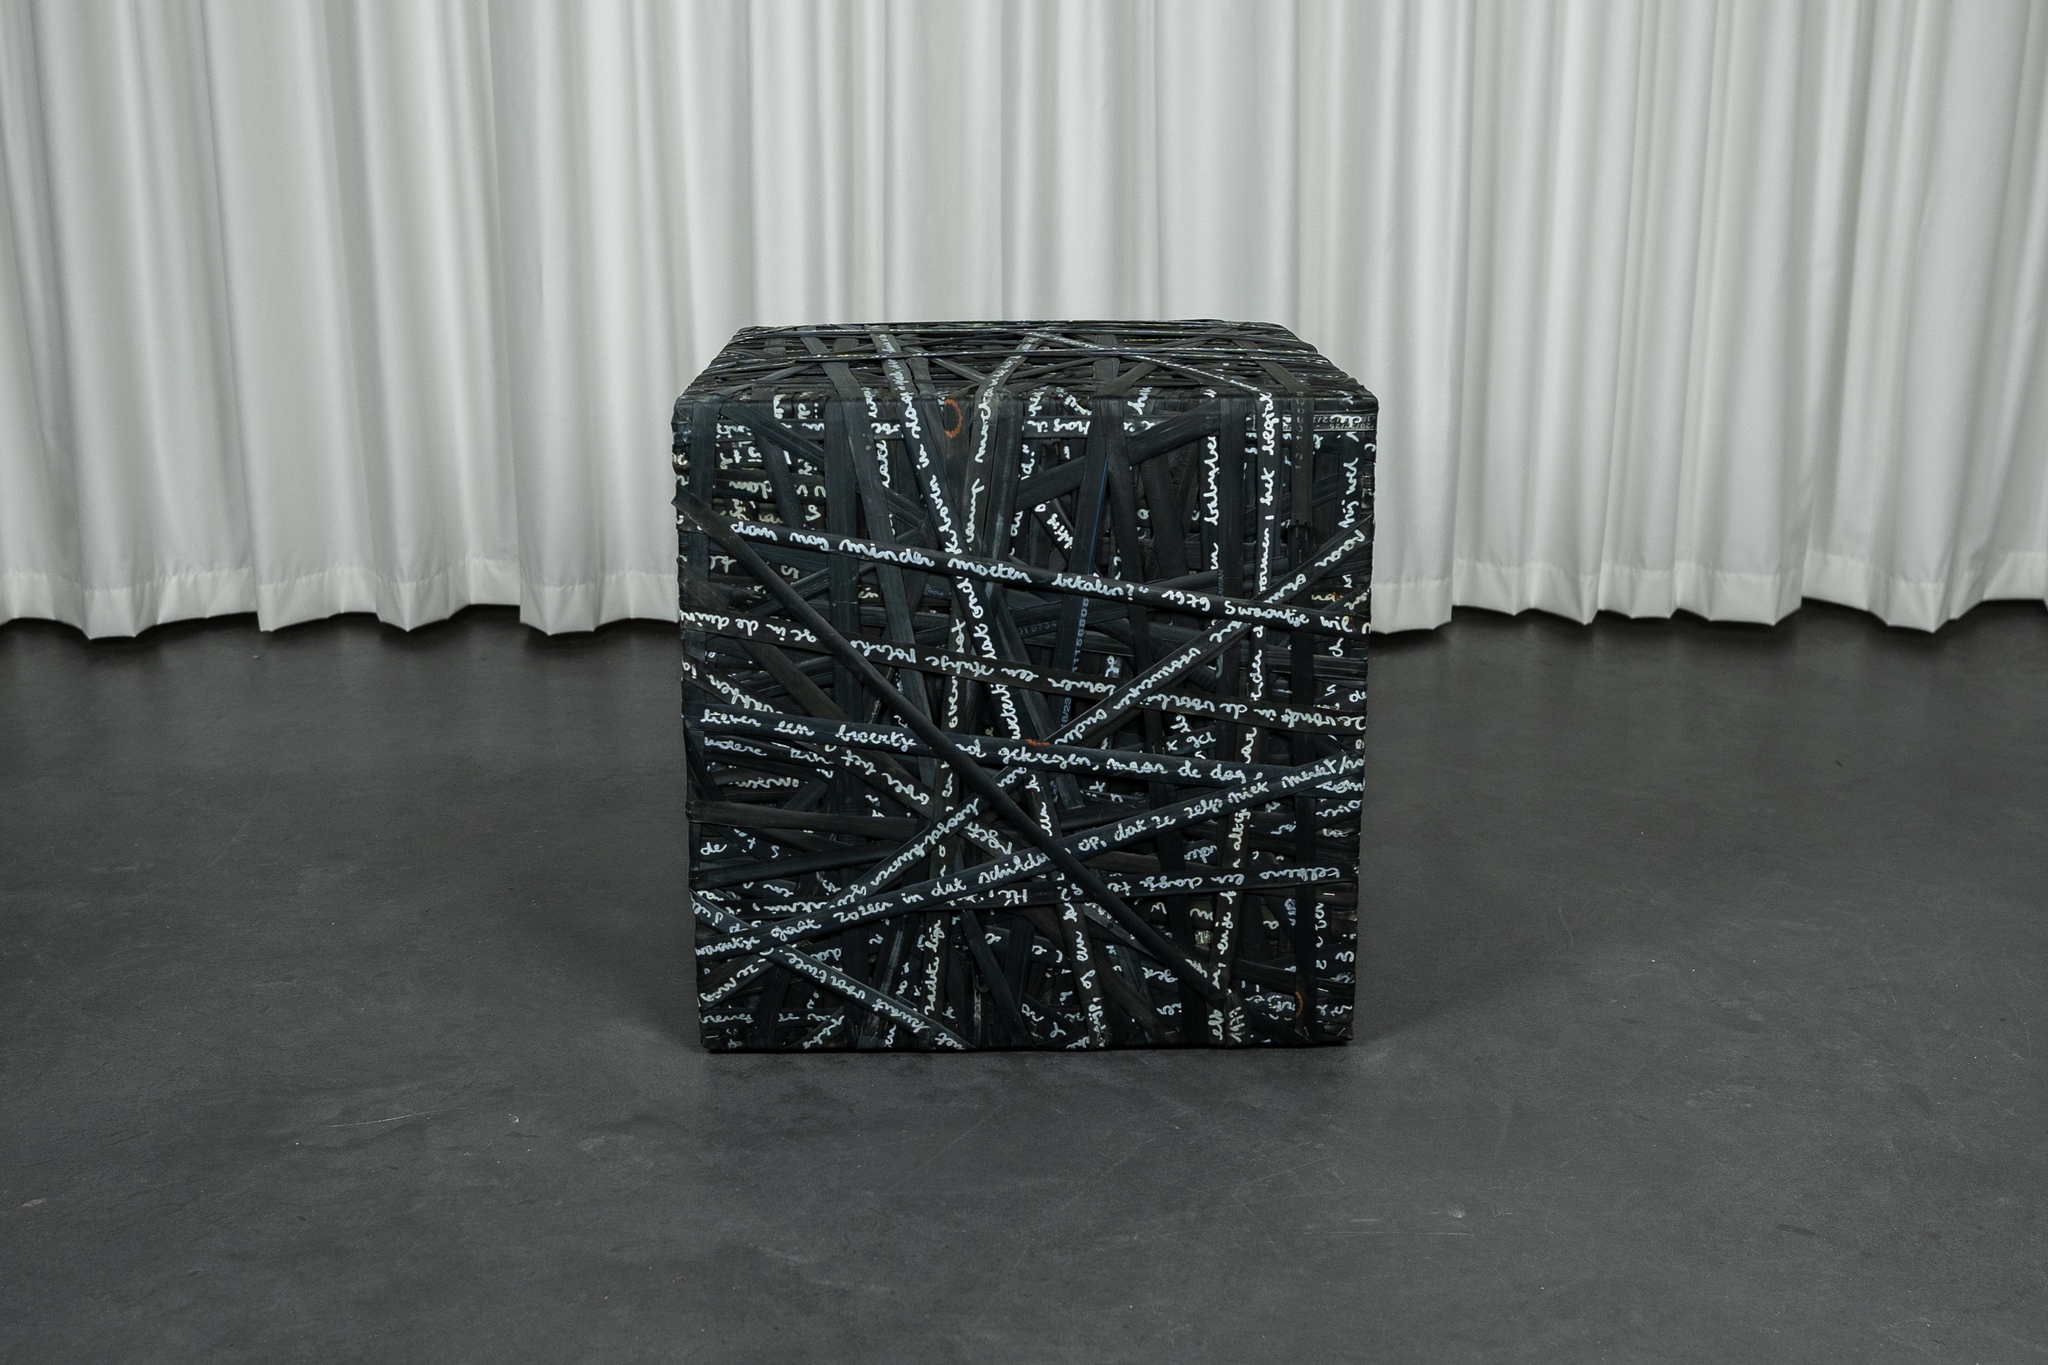 Memory Cube, Anneke Lauwaert, 2011